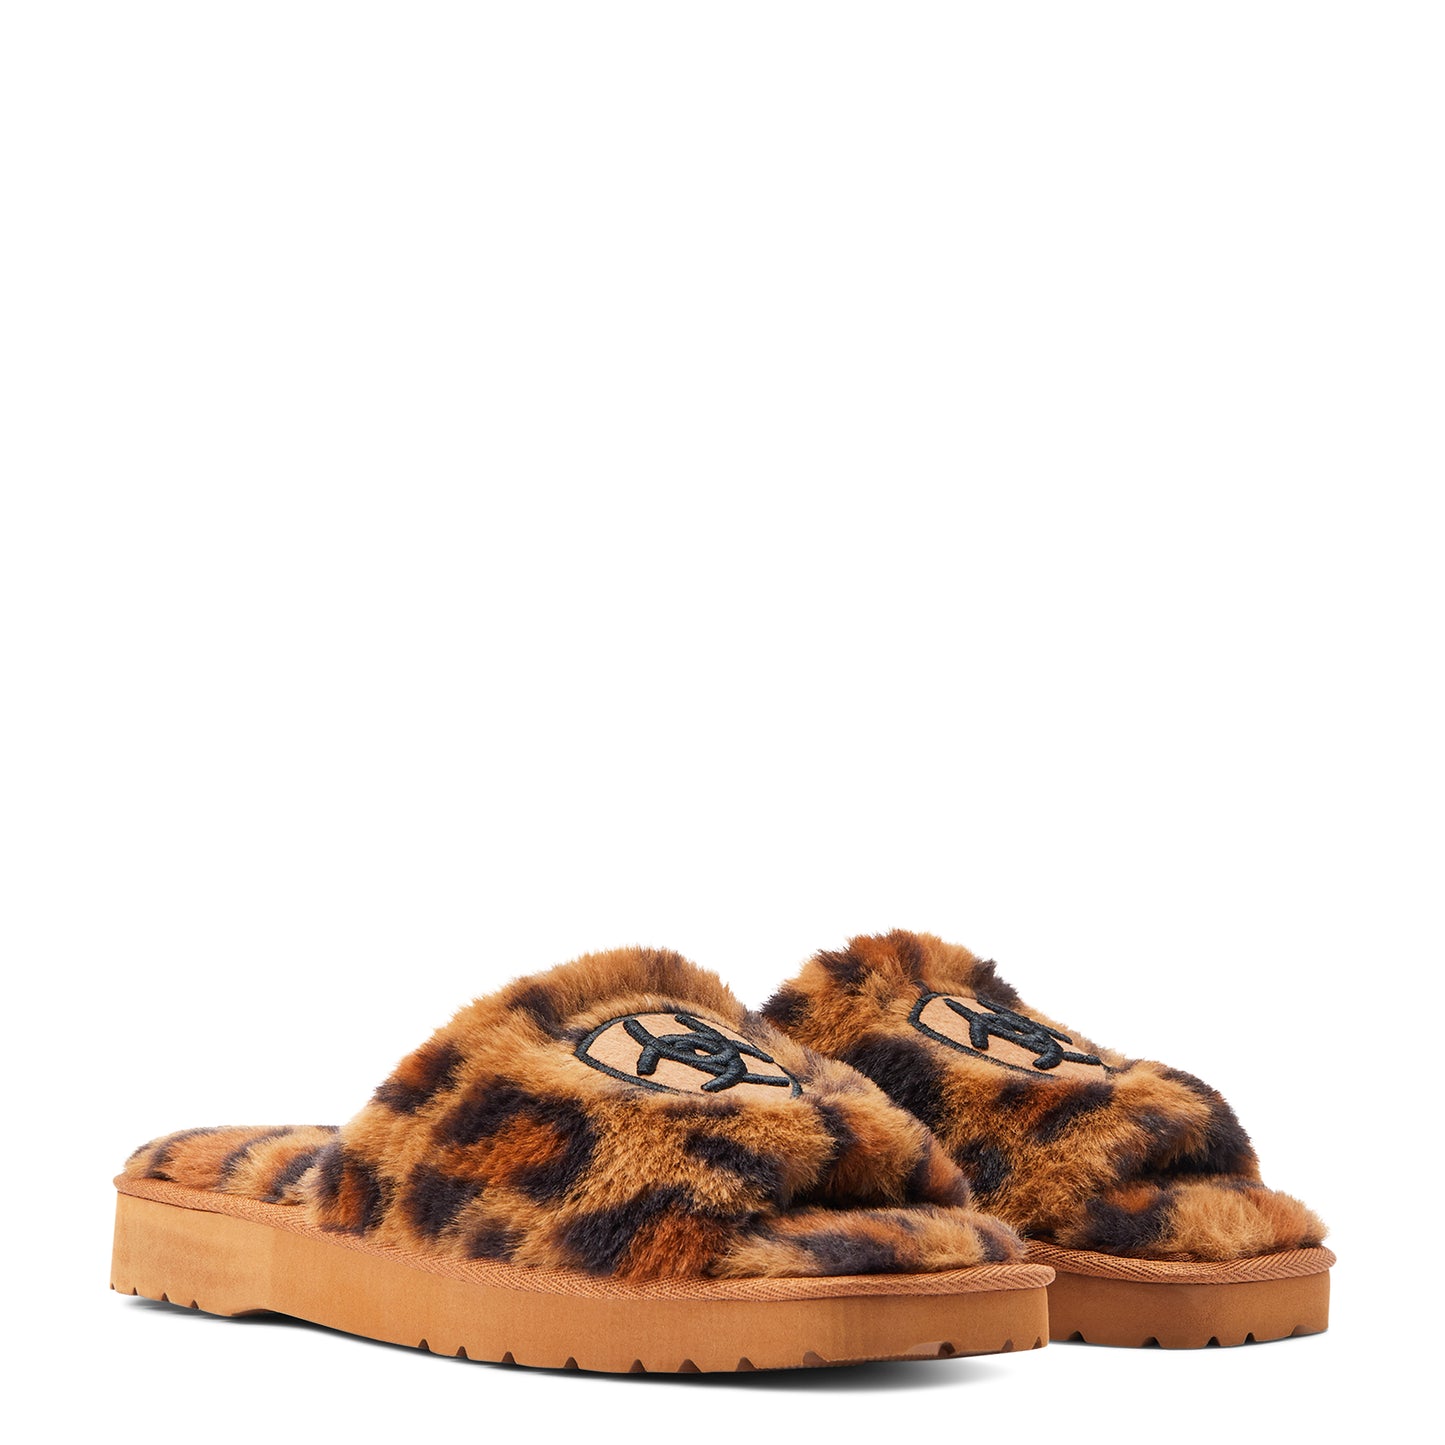 Ariat Ladies Cozy Fuzzy Leopard Print Square Toe Slippers AR2697-214